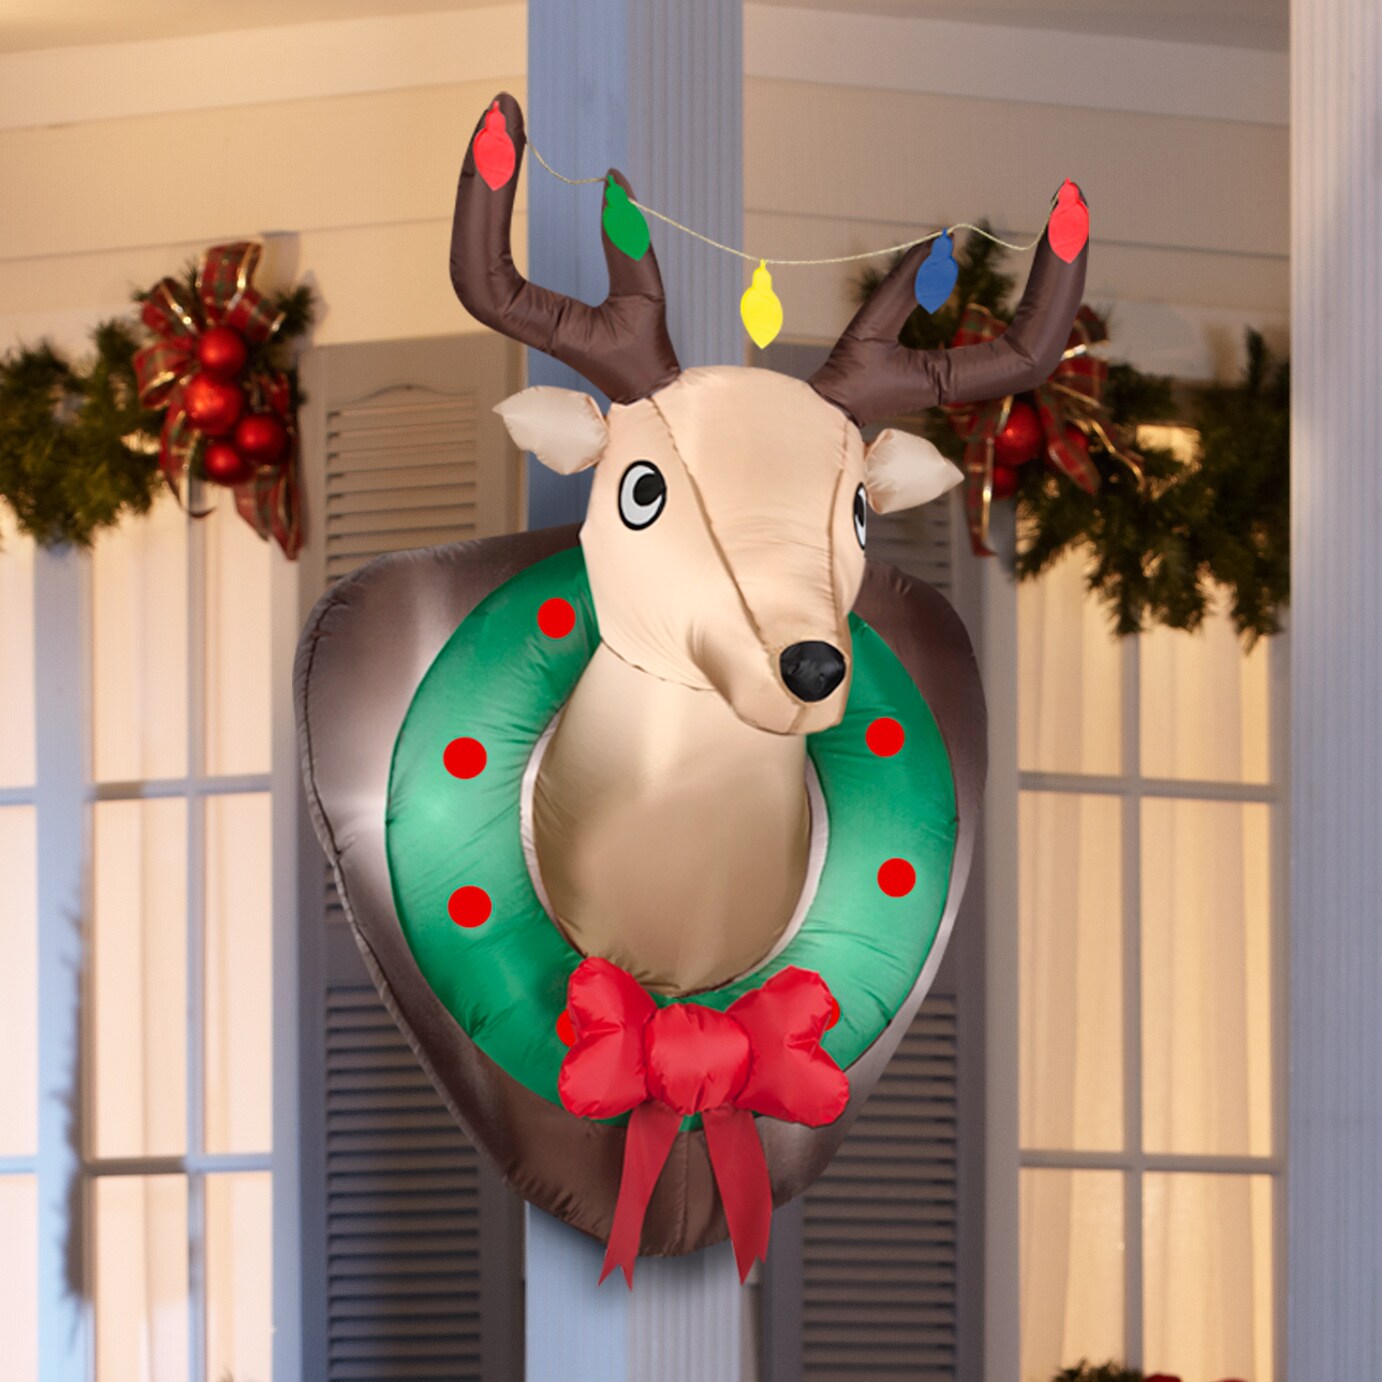 Inflatable Elk Horn Water Toys Deer Head Shape Kids Christmas Decorations Games